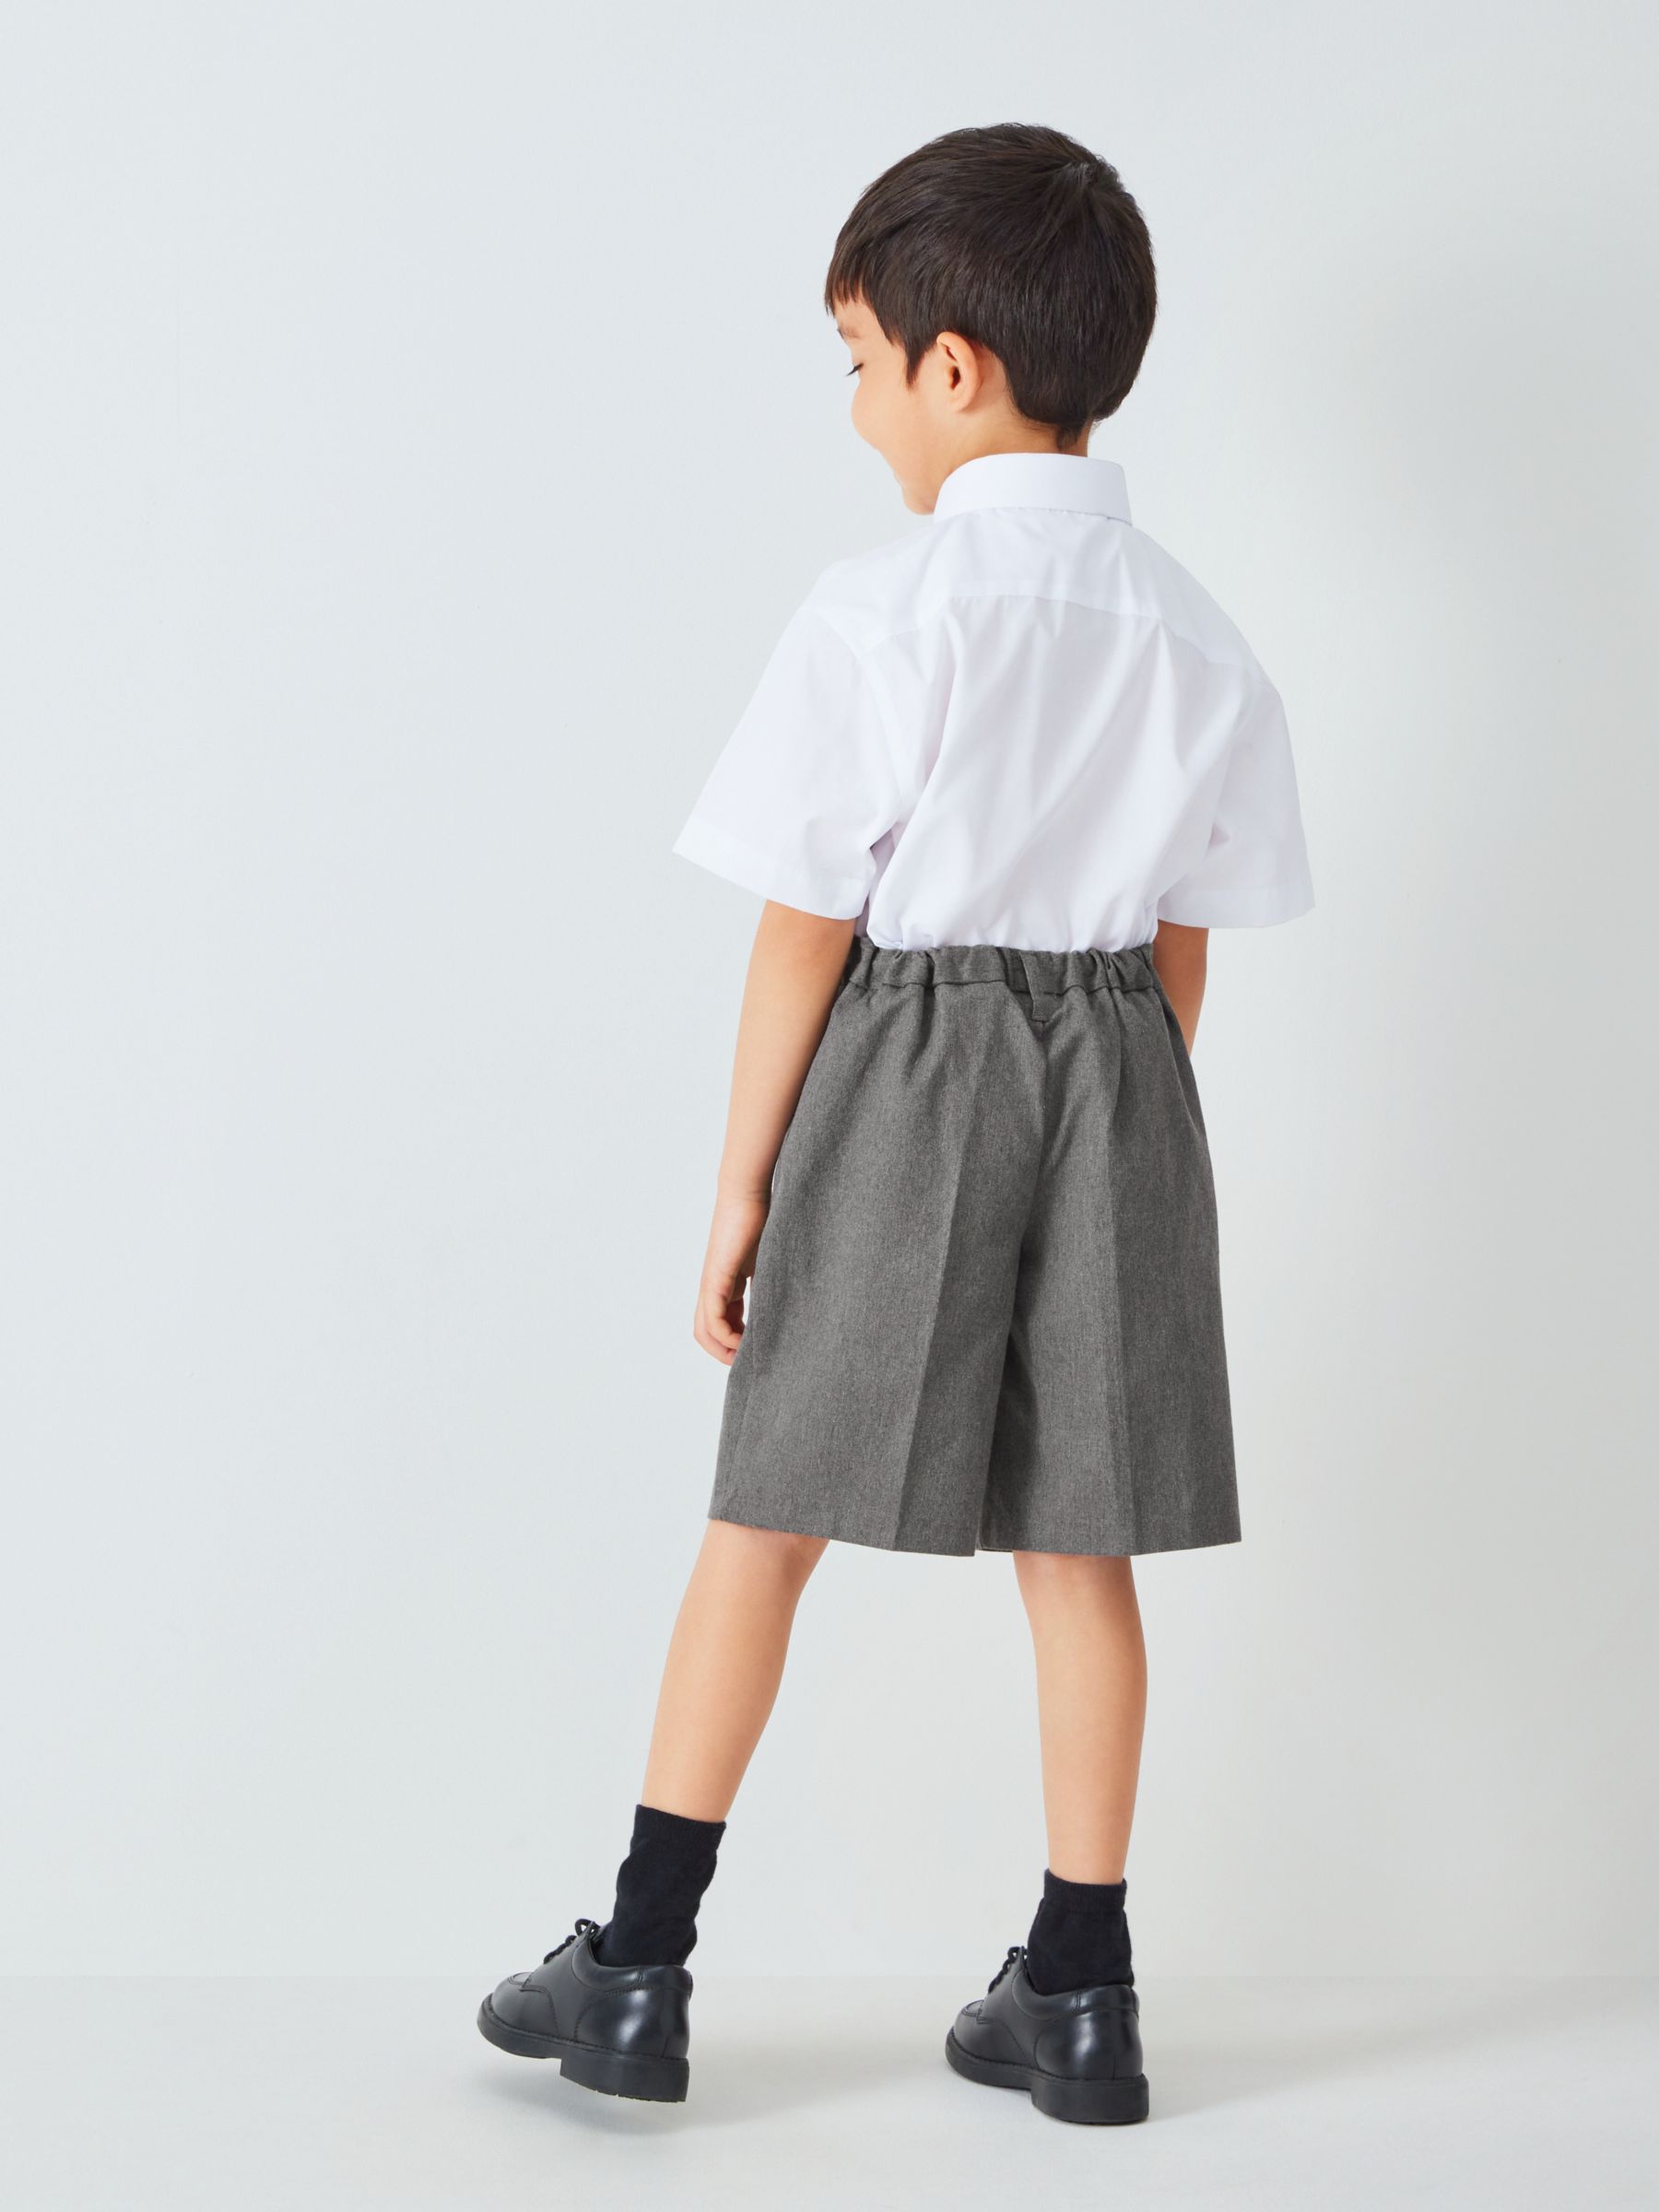 John Lewis Boys' Adjustable Waist Cotton School Shorts, Grey, Mid Grey, 3  years